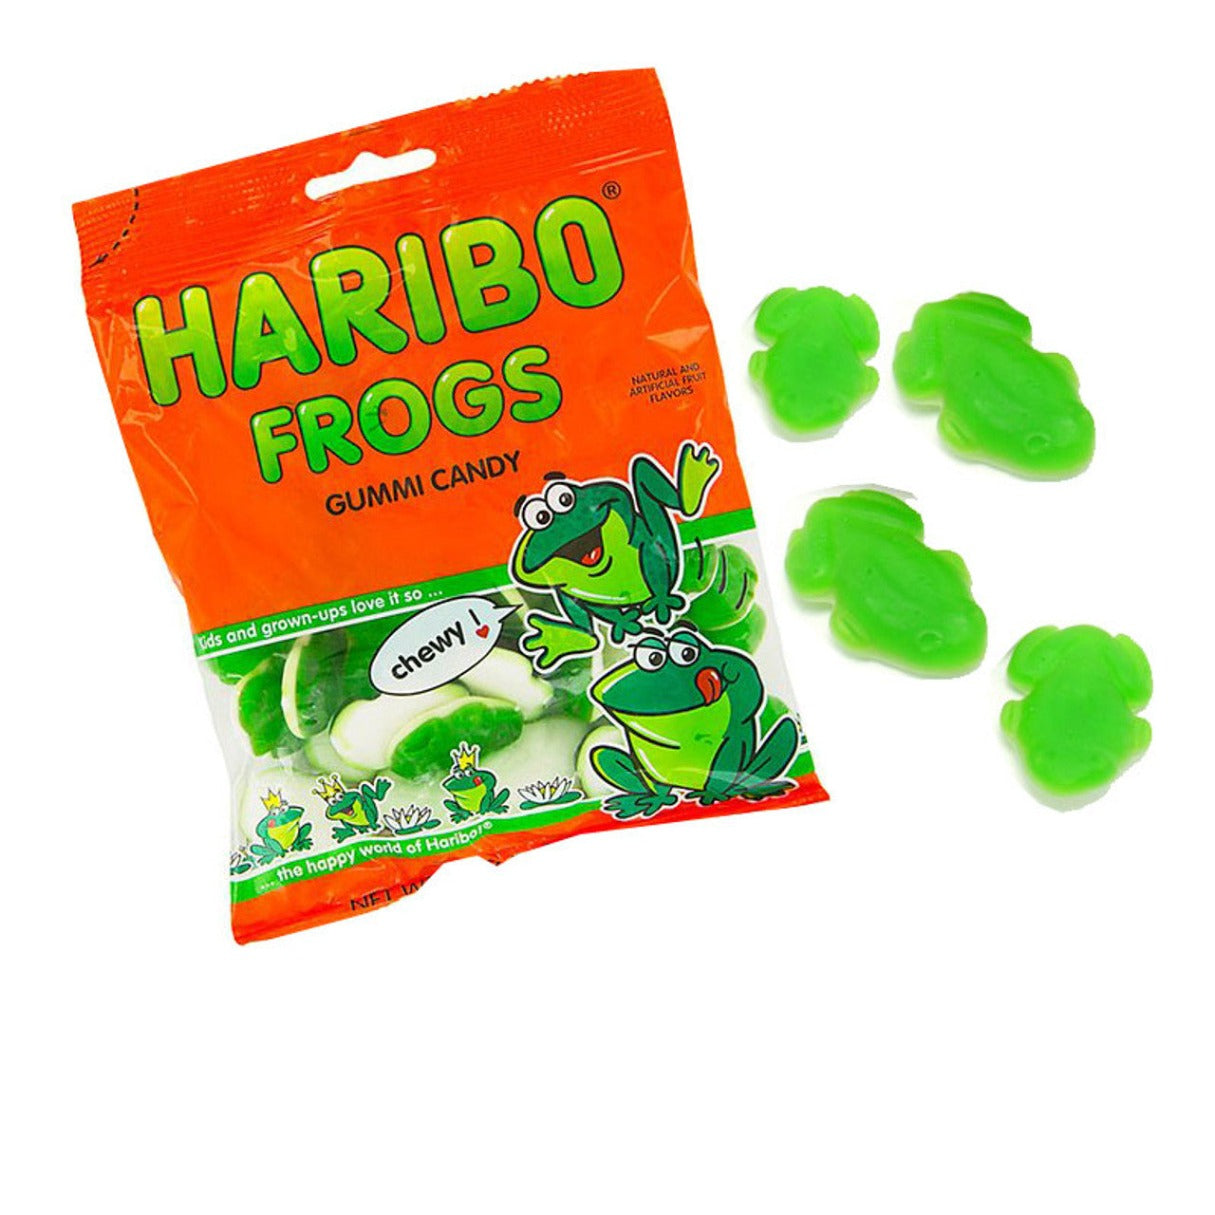 Haribo Rainbow Mini Frogs Gummi Candy 5oz Bag - 12ct